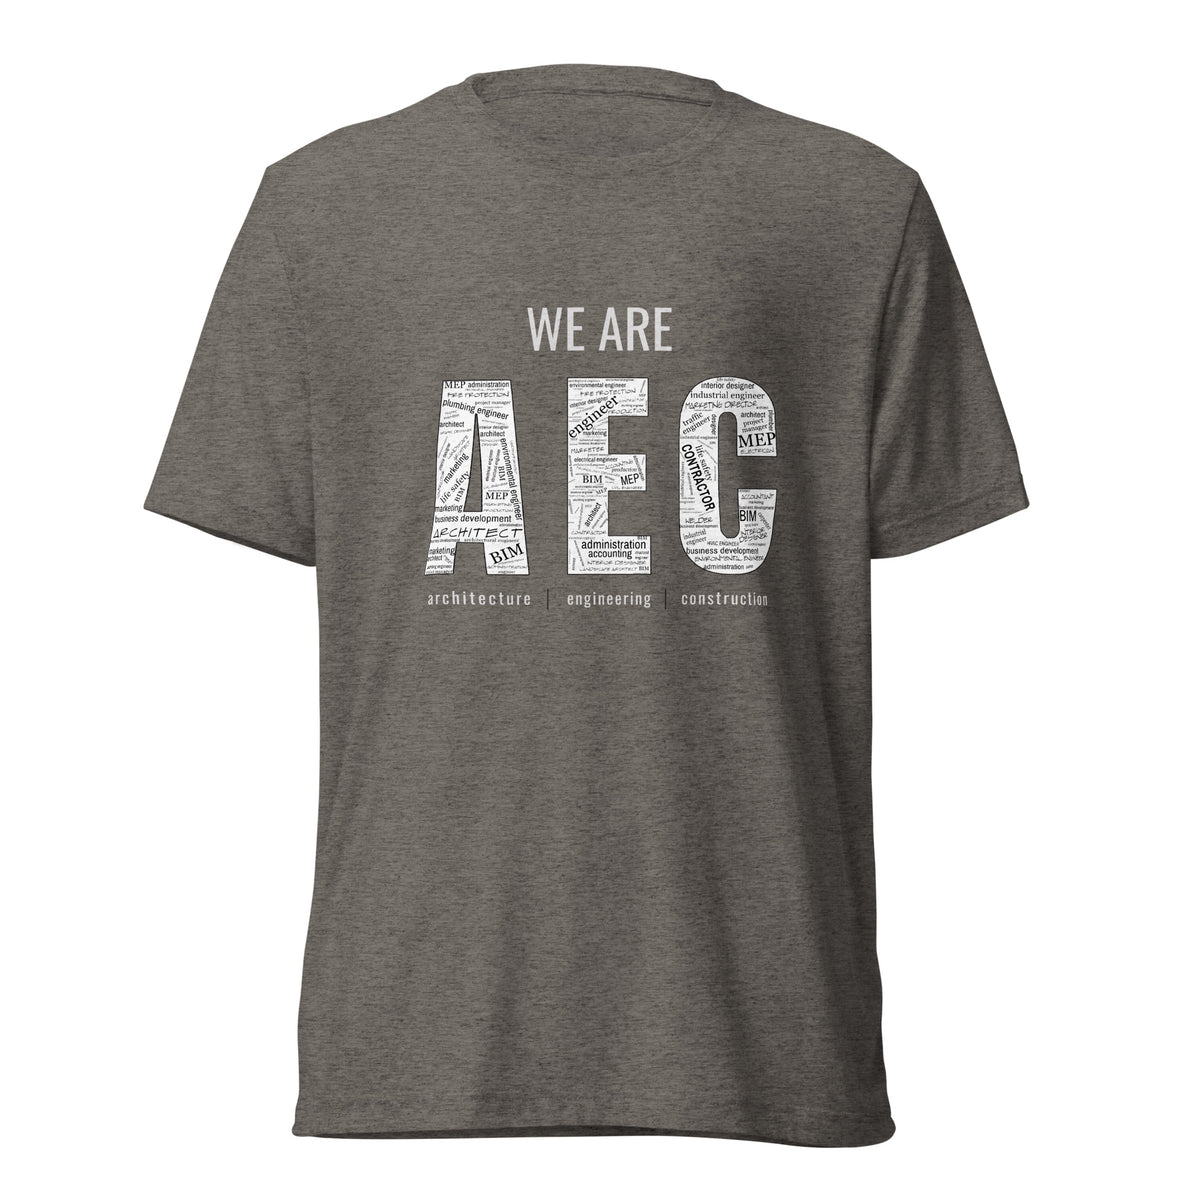 We are AEC | Supervisor Cover